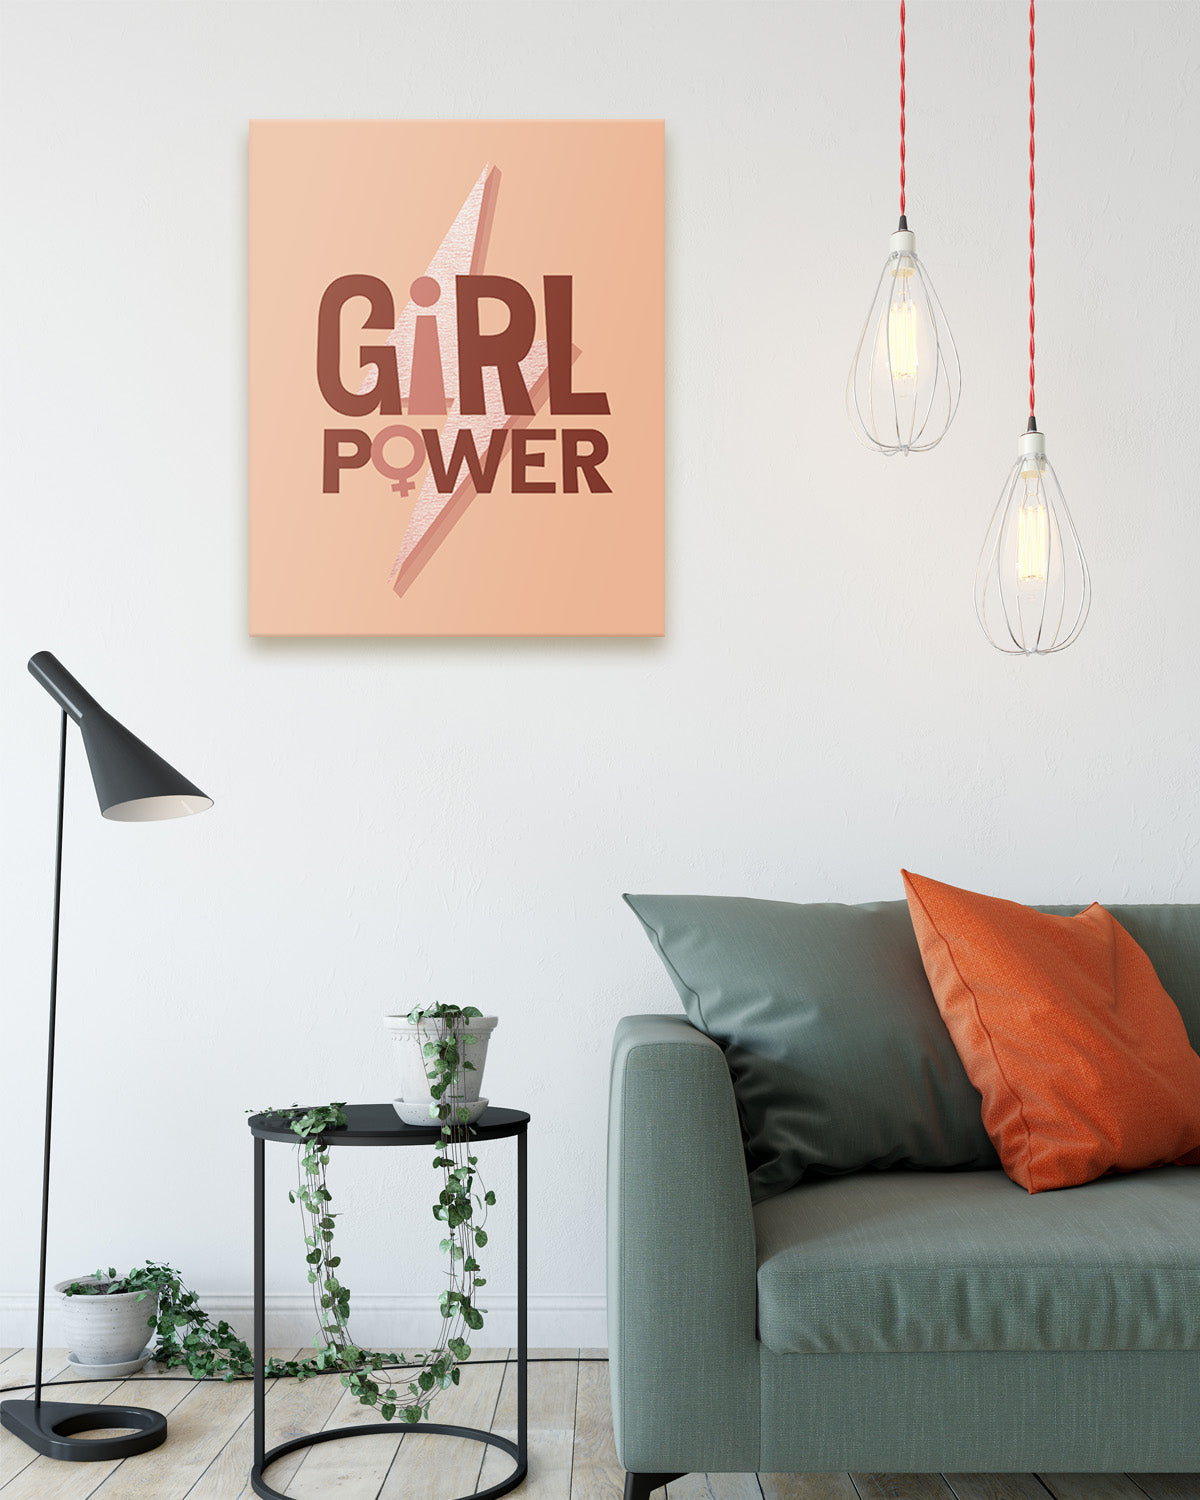 Govivo Girl power room decor - inspirational gifts for women - bedroom wall decor for women or dorm wall decor - office wall art women